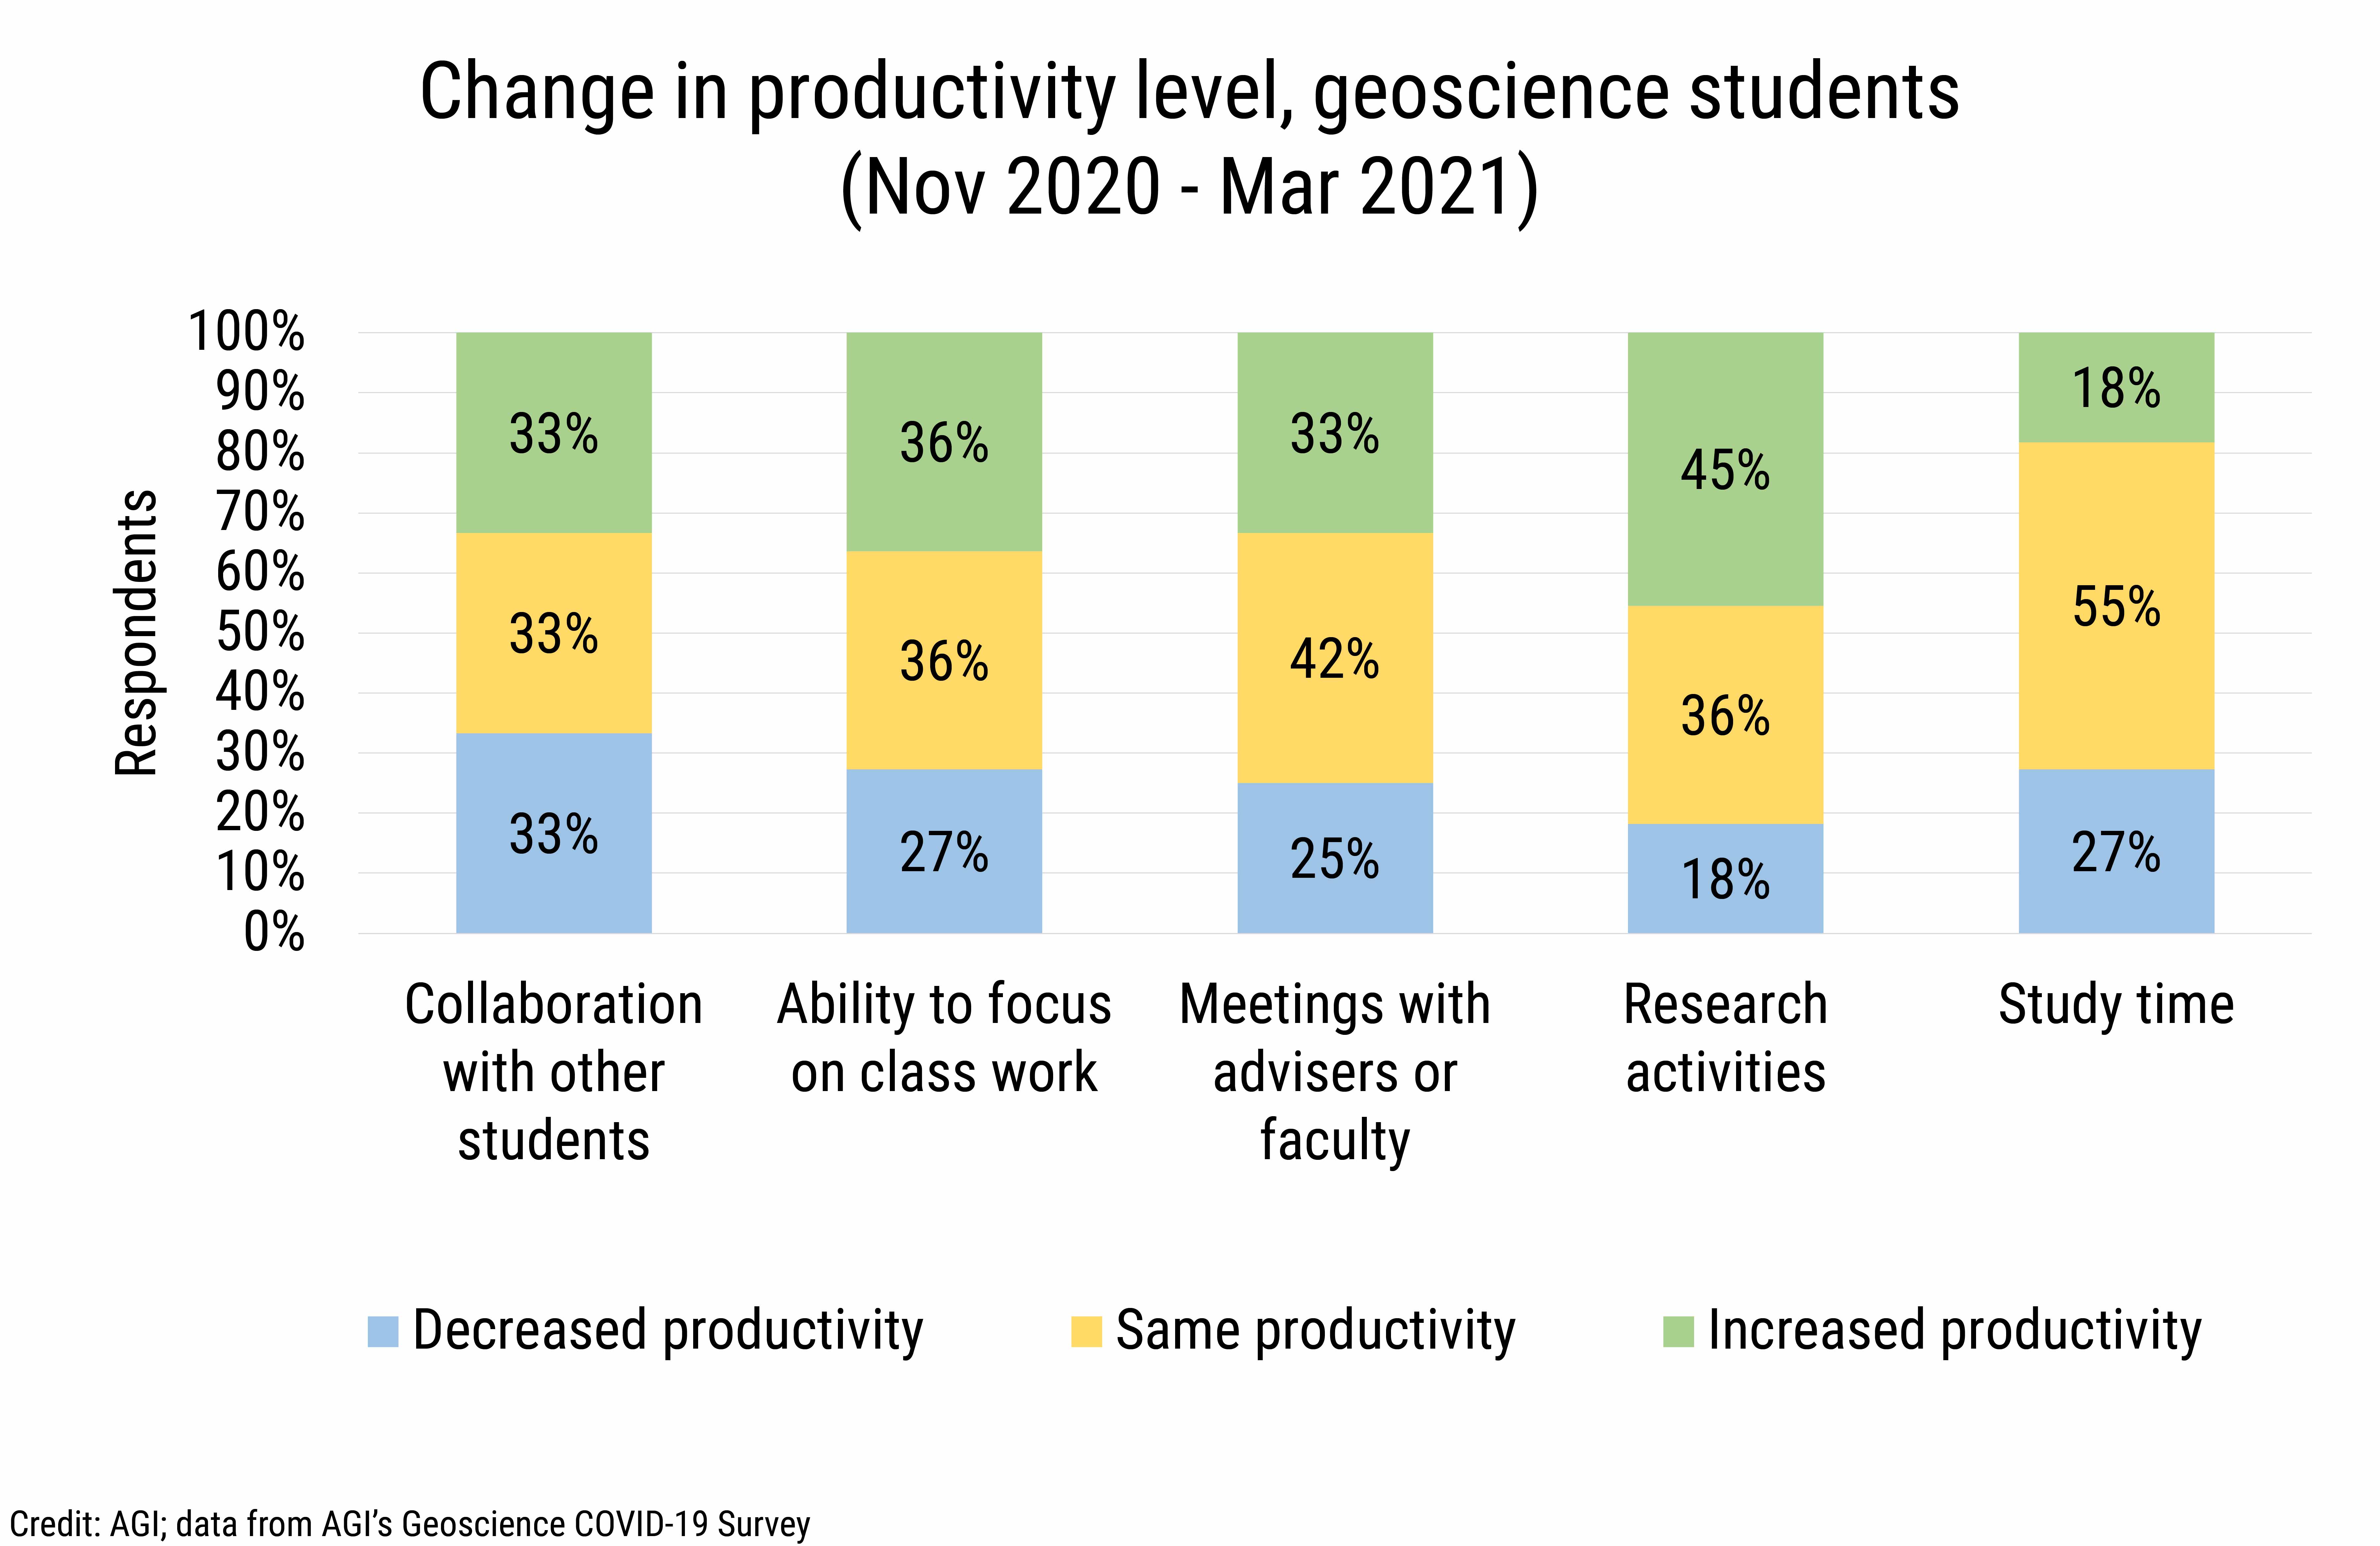 DB_2021-018 chart 05: Change in productivity level, geoscience students (Nov 2020 - Mar 2021)  (Credit: AGI; data from AGI's Geoscience COVID-19 Survey)